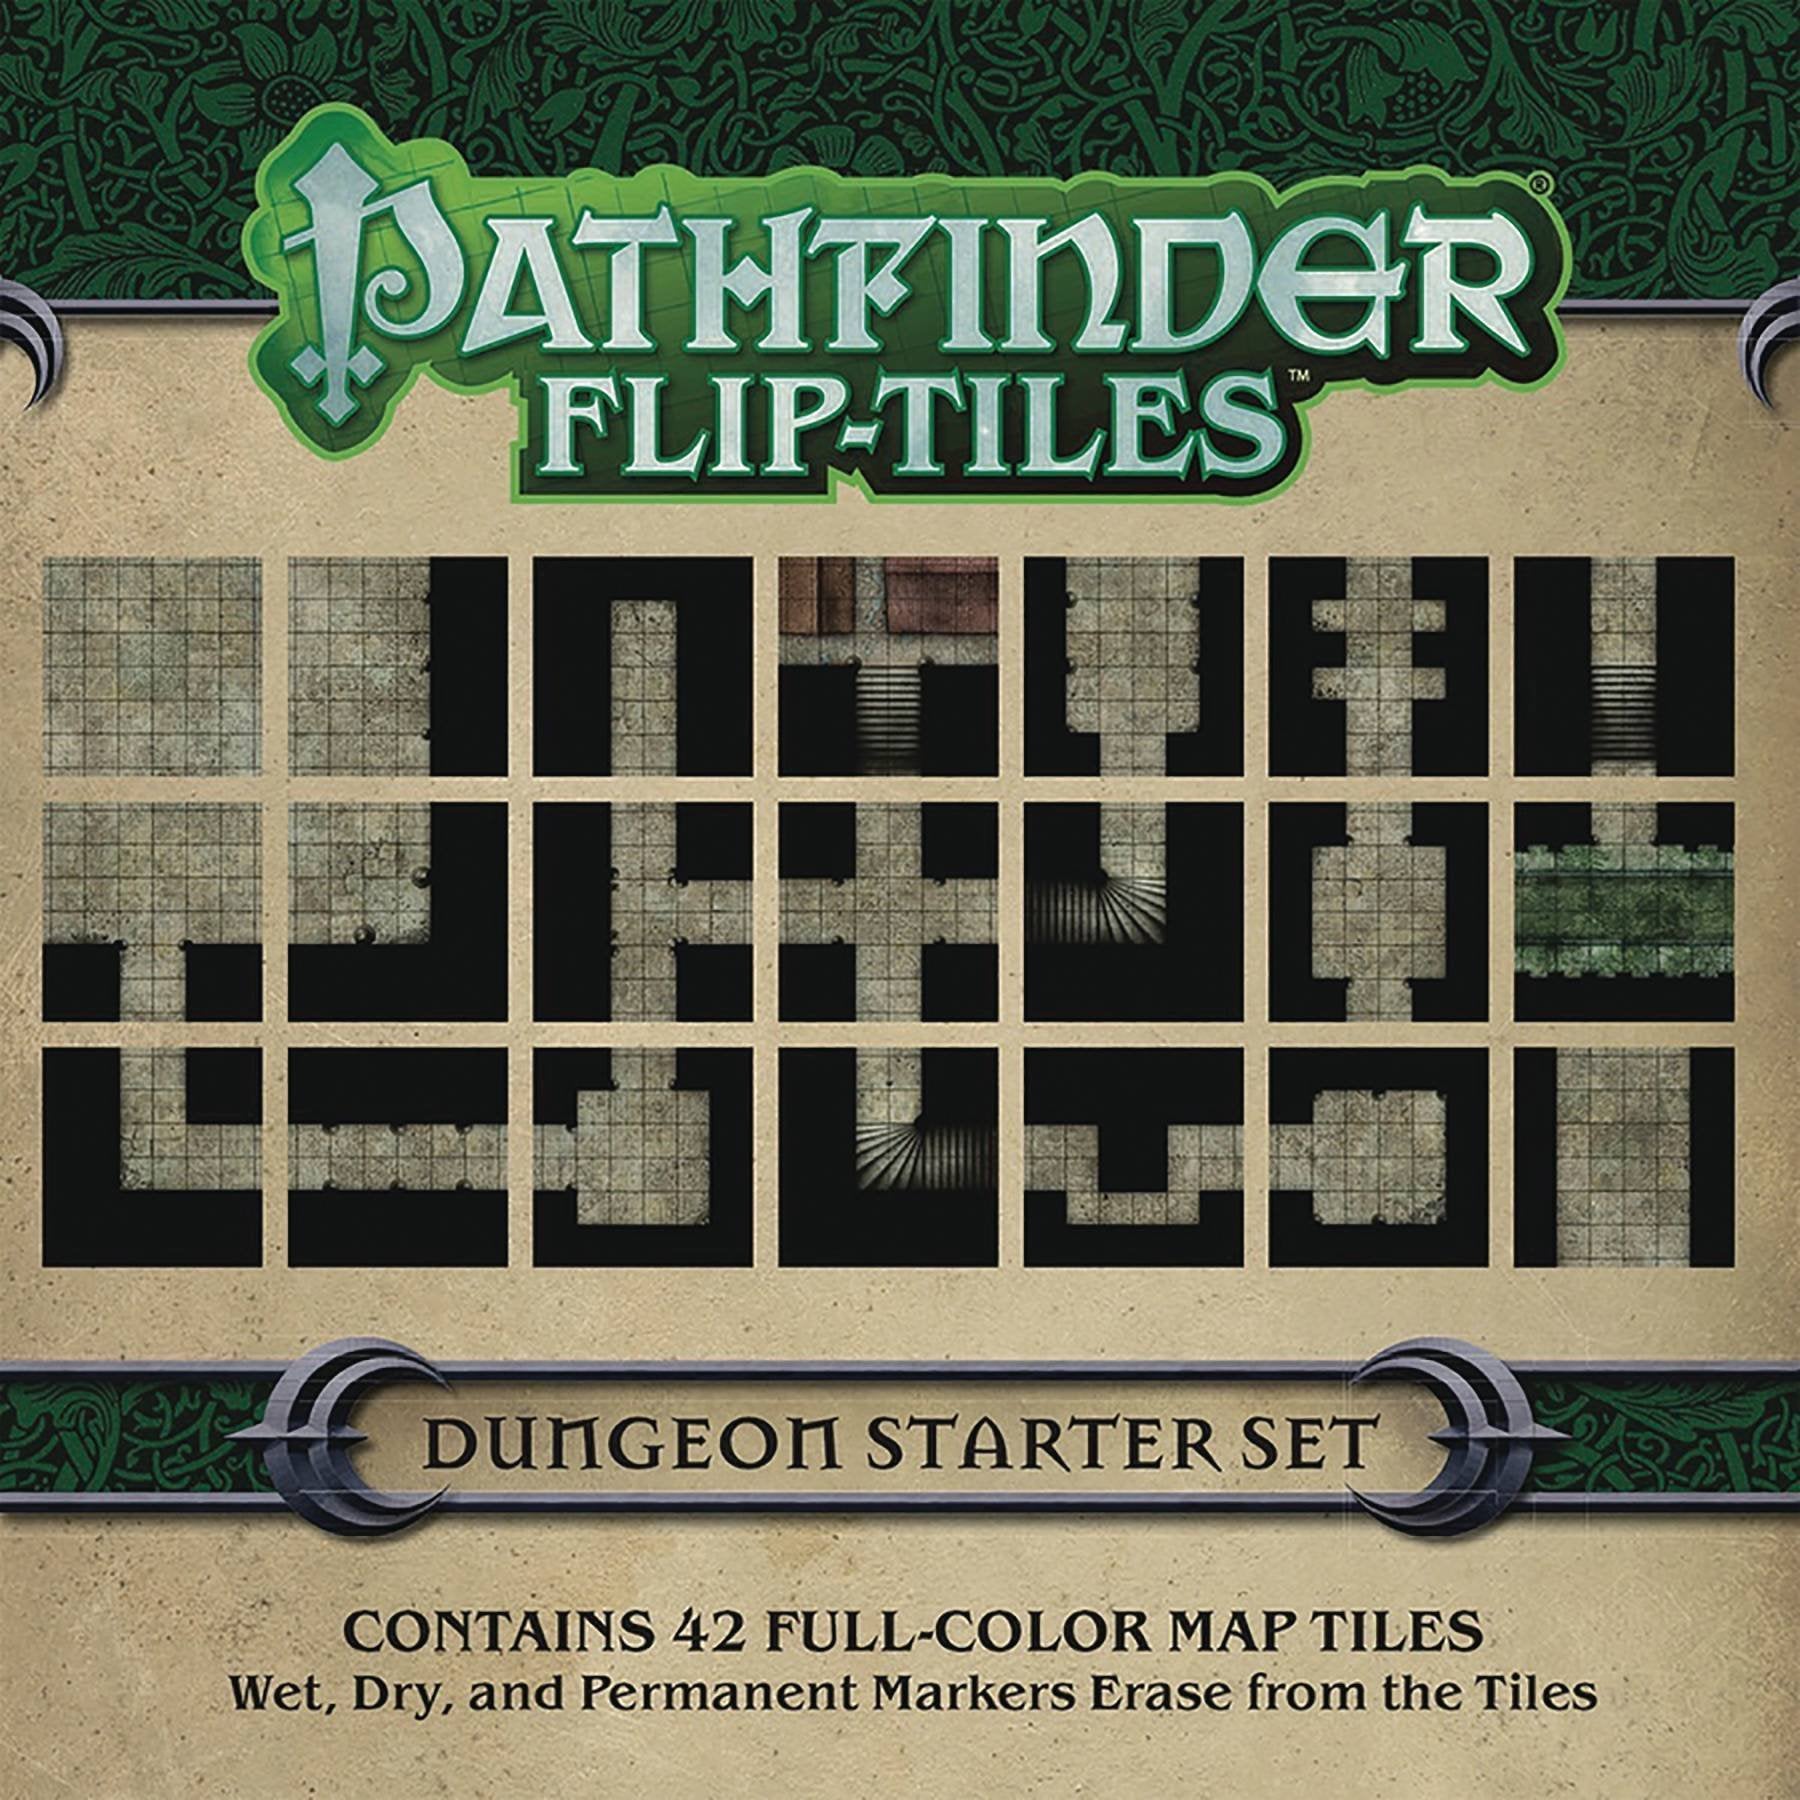 (BSG Certified USED) Pathfinder: RPG - Flip-Tiles:  Dungeon Starter Set